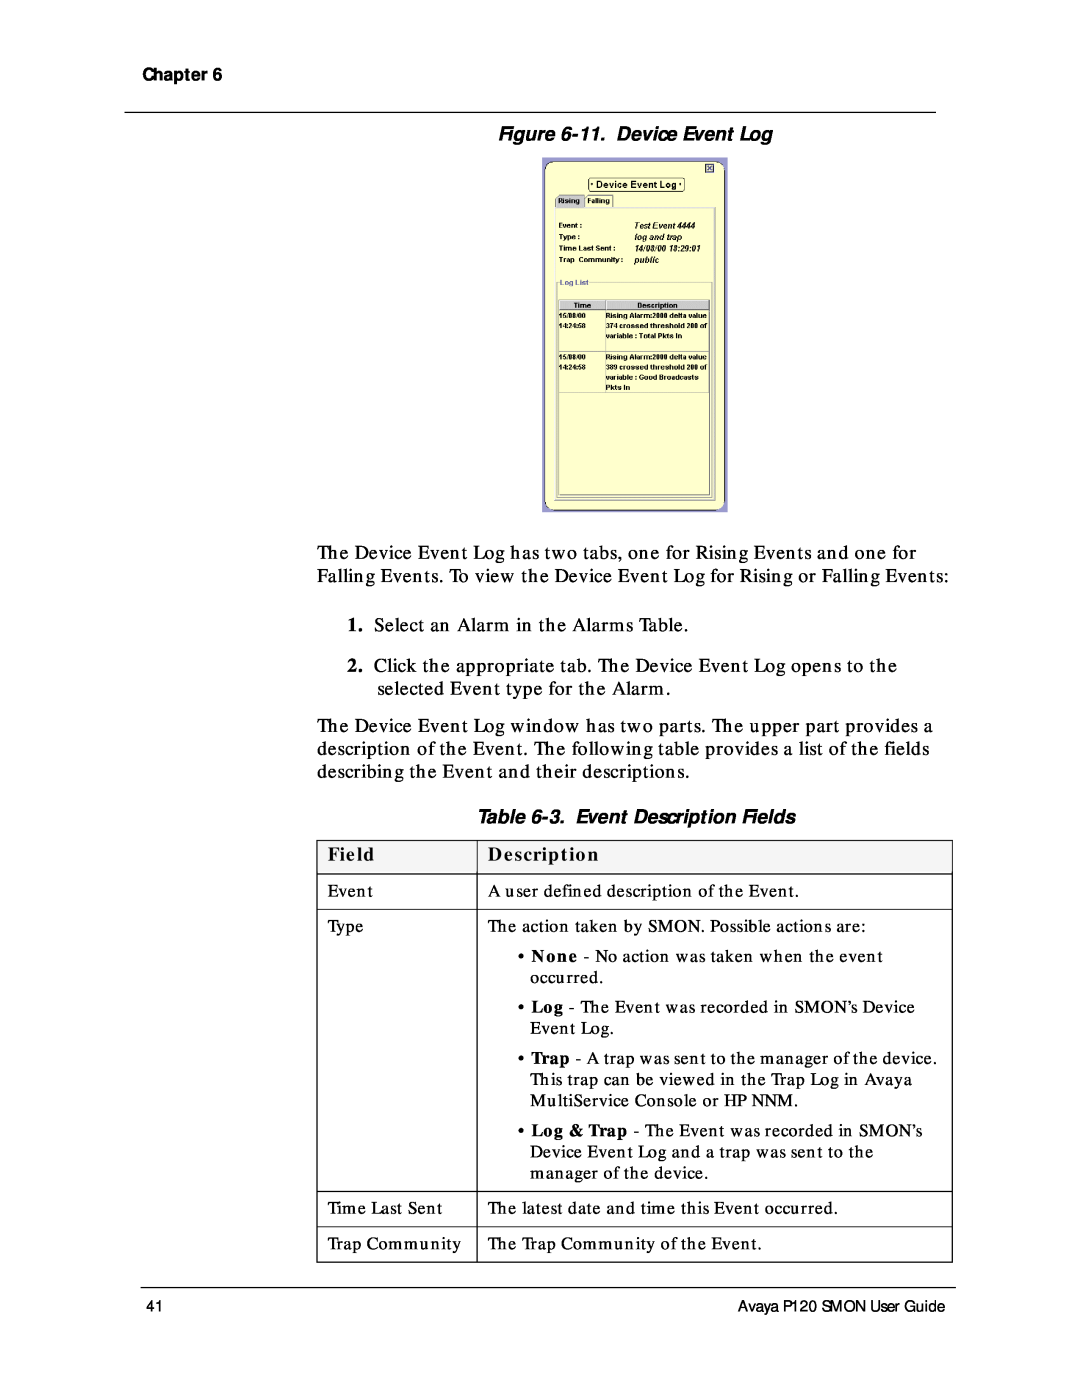 Avaya P120 SMON manual 11. Device Event Log, 3. Event Description Fields 